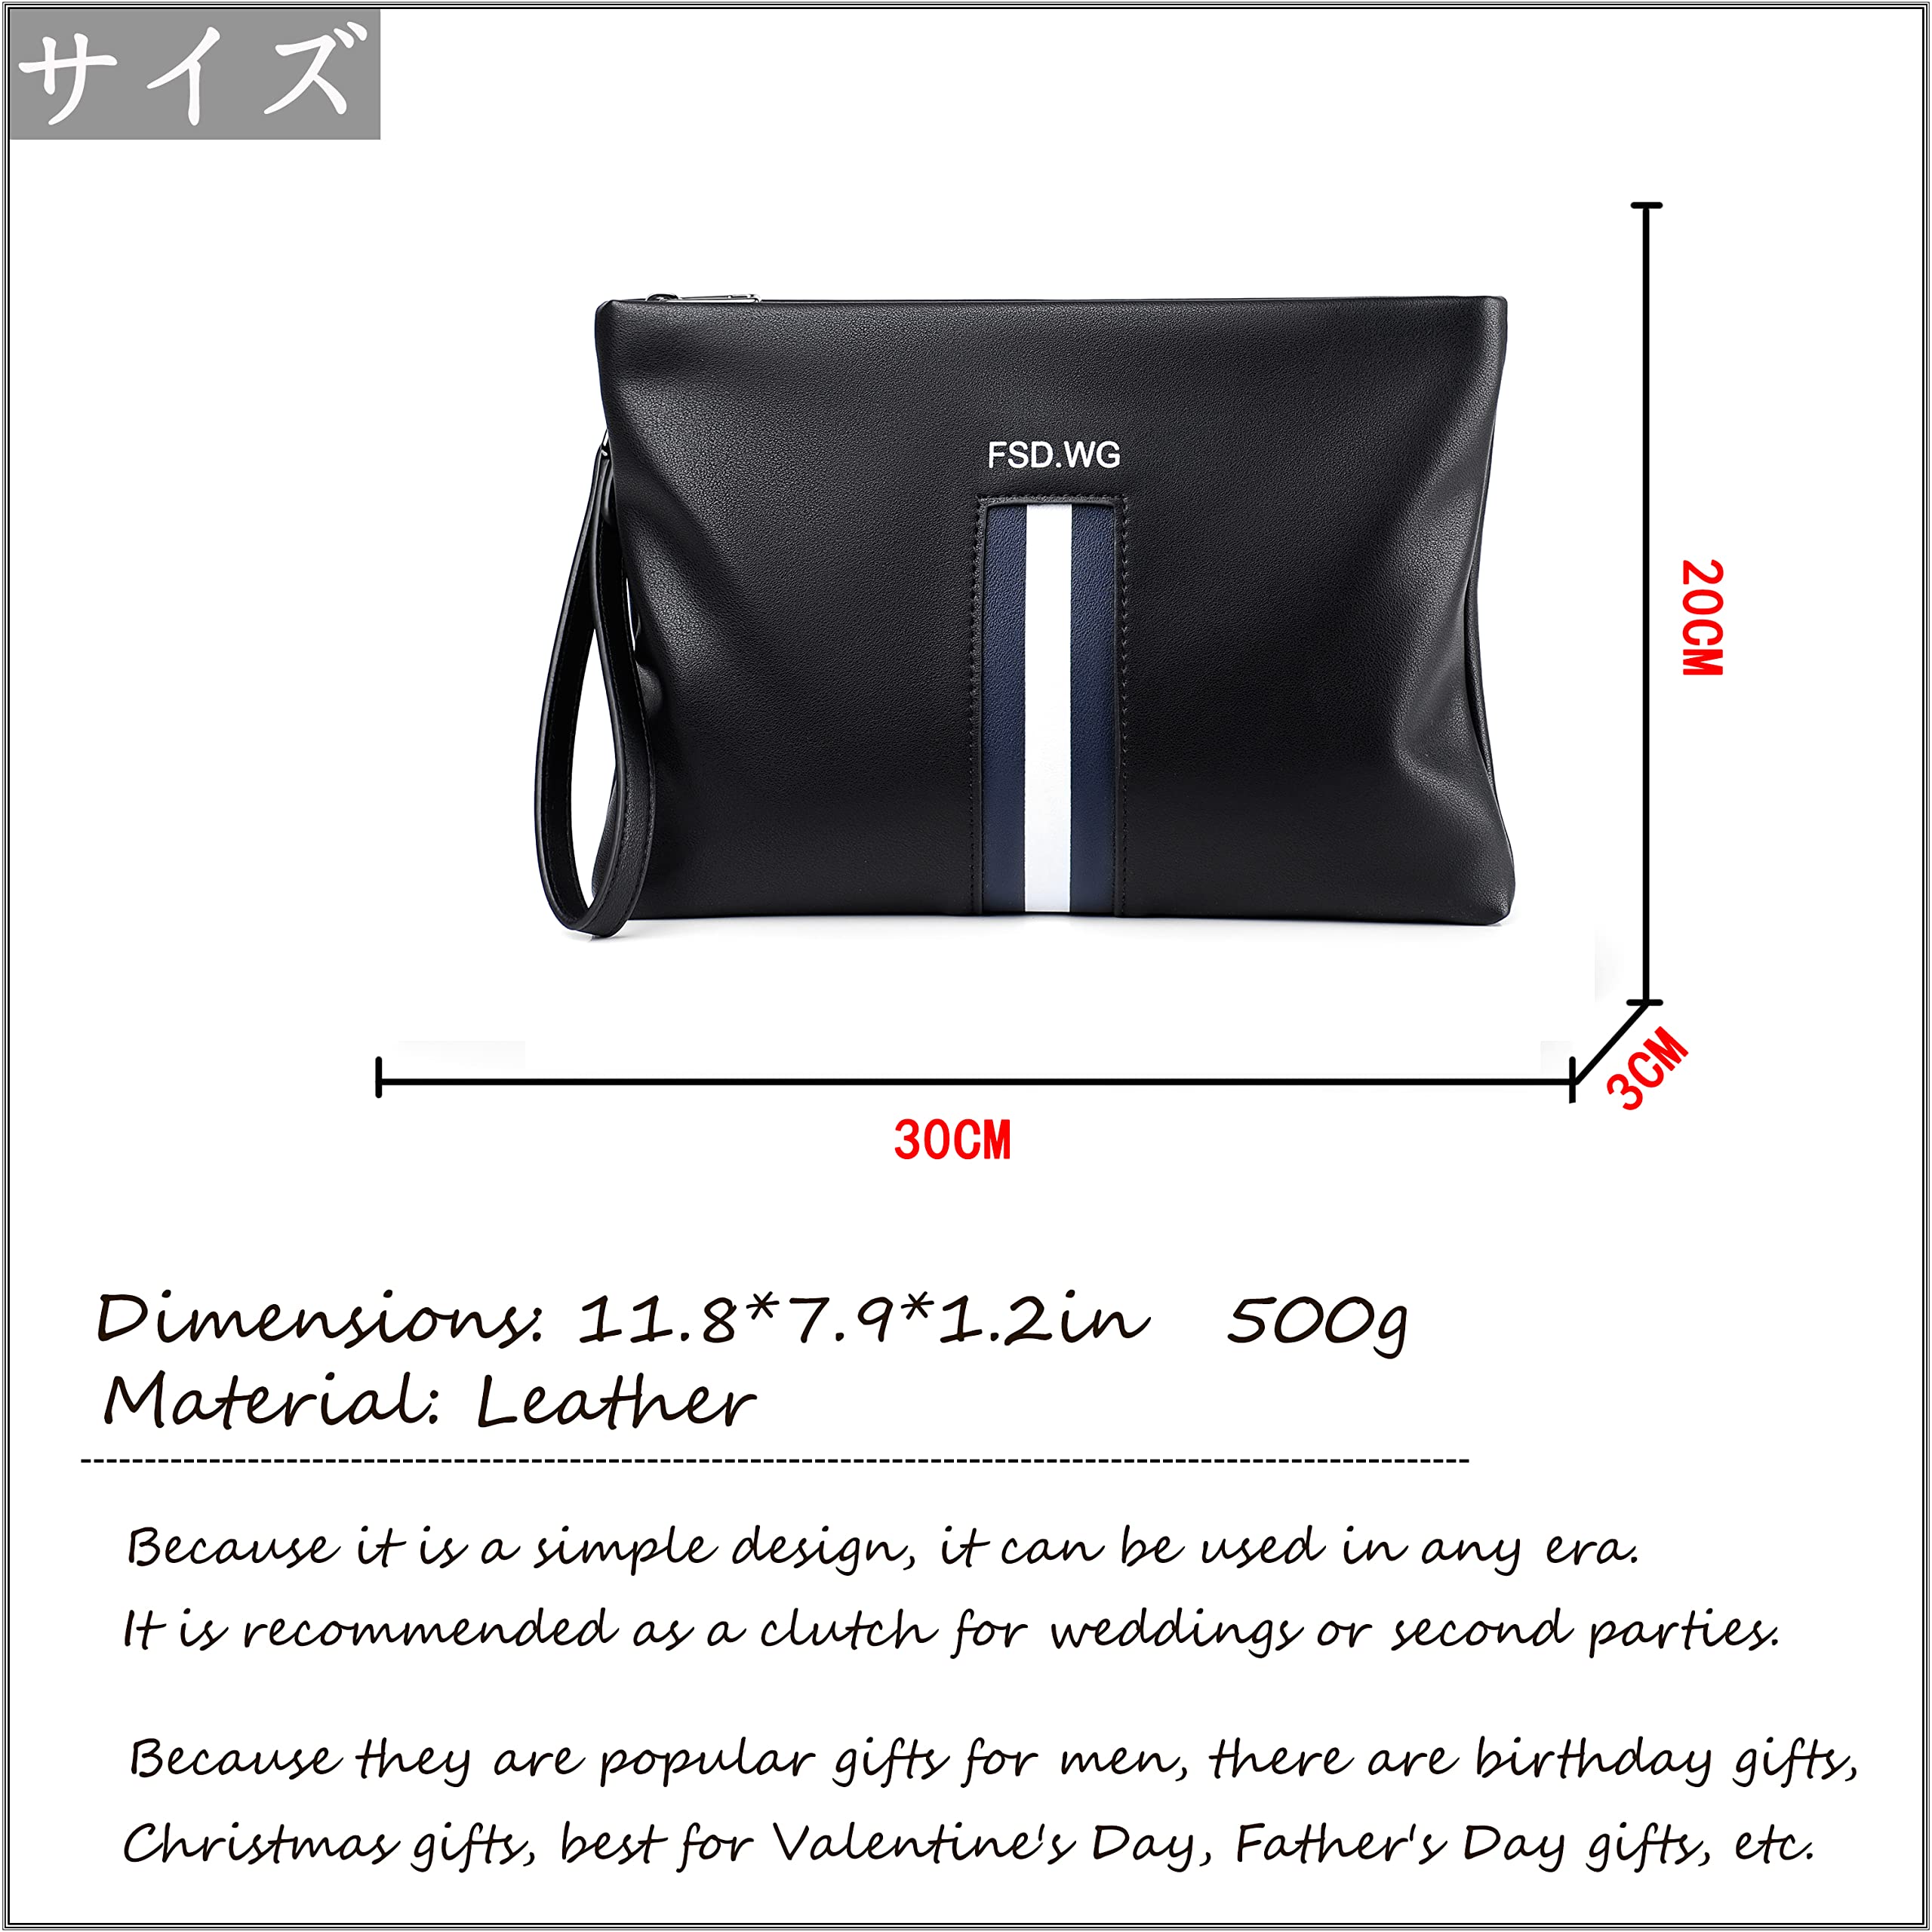  FSD.WG Mens Clutch Bag Man Purse Handbag 12 inches